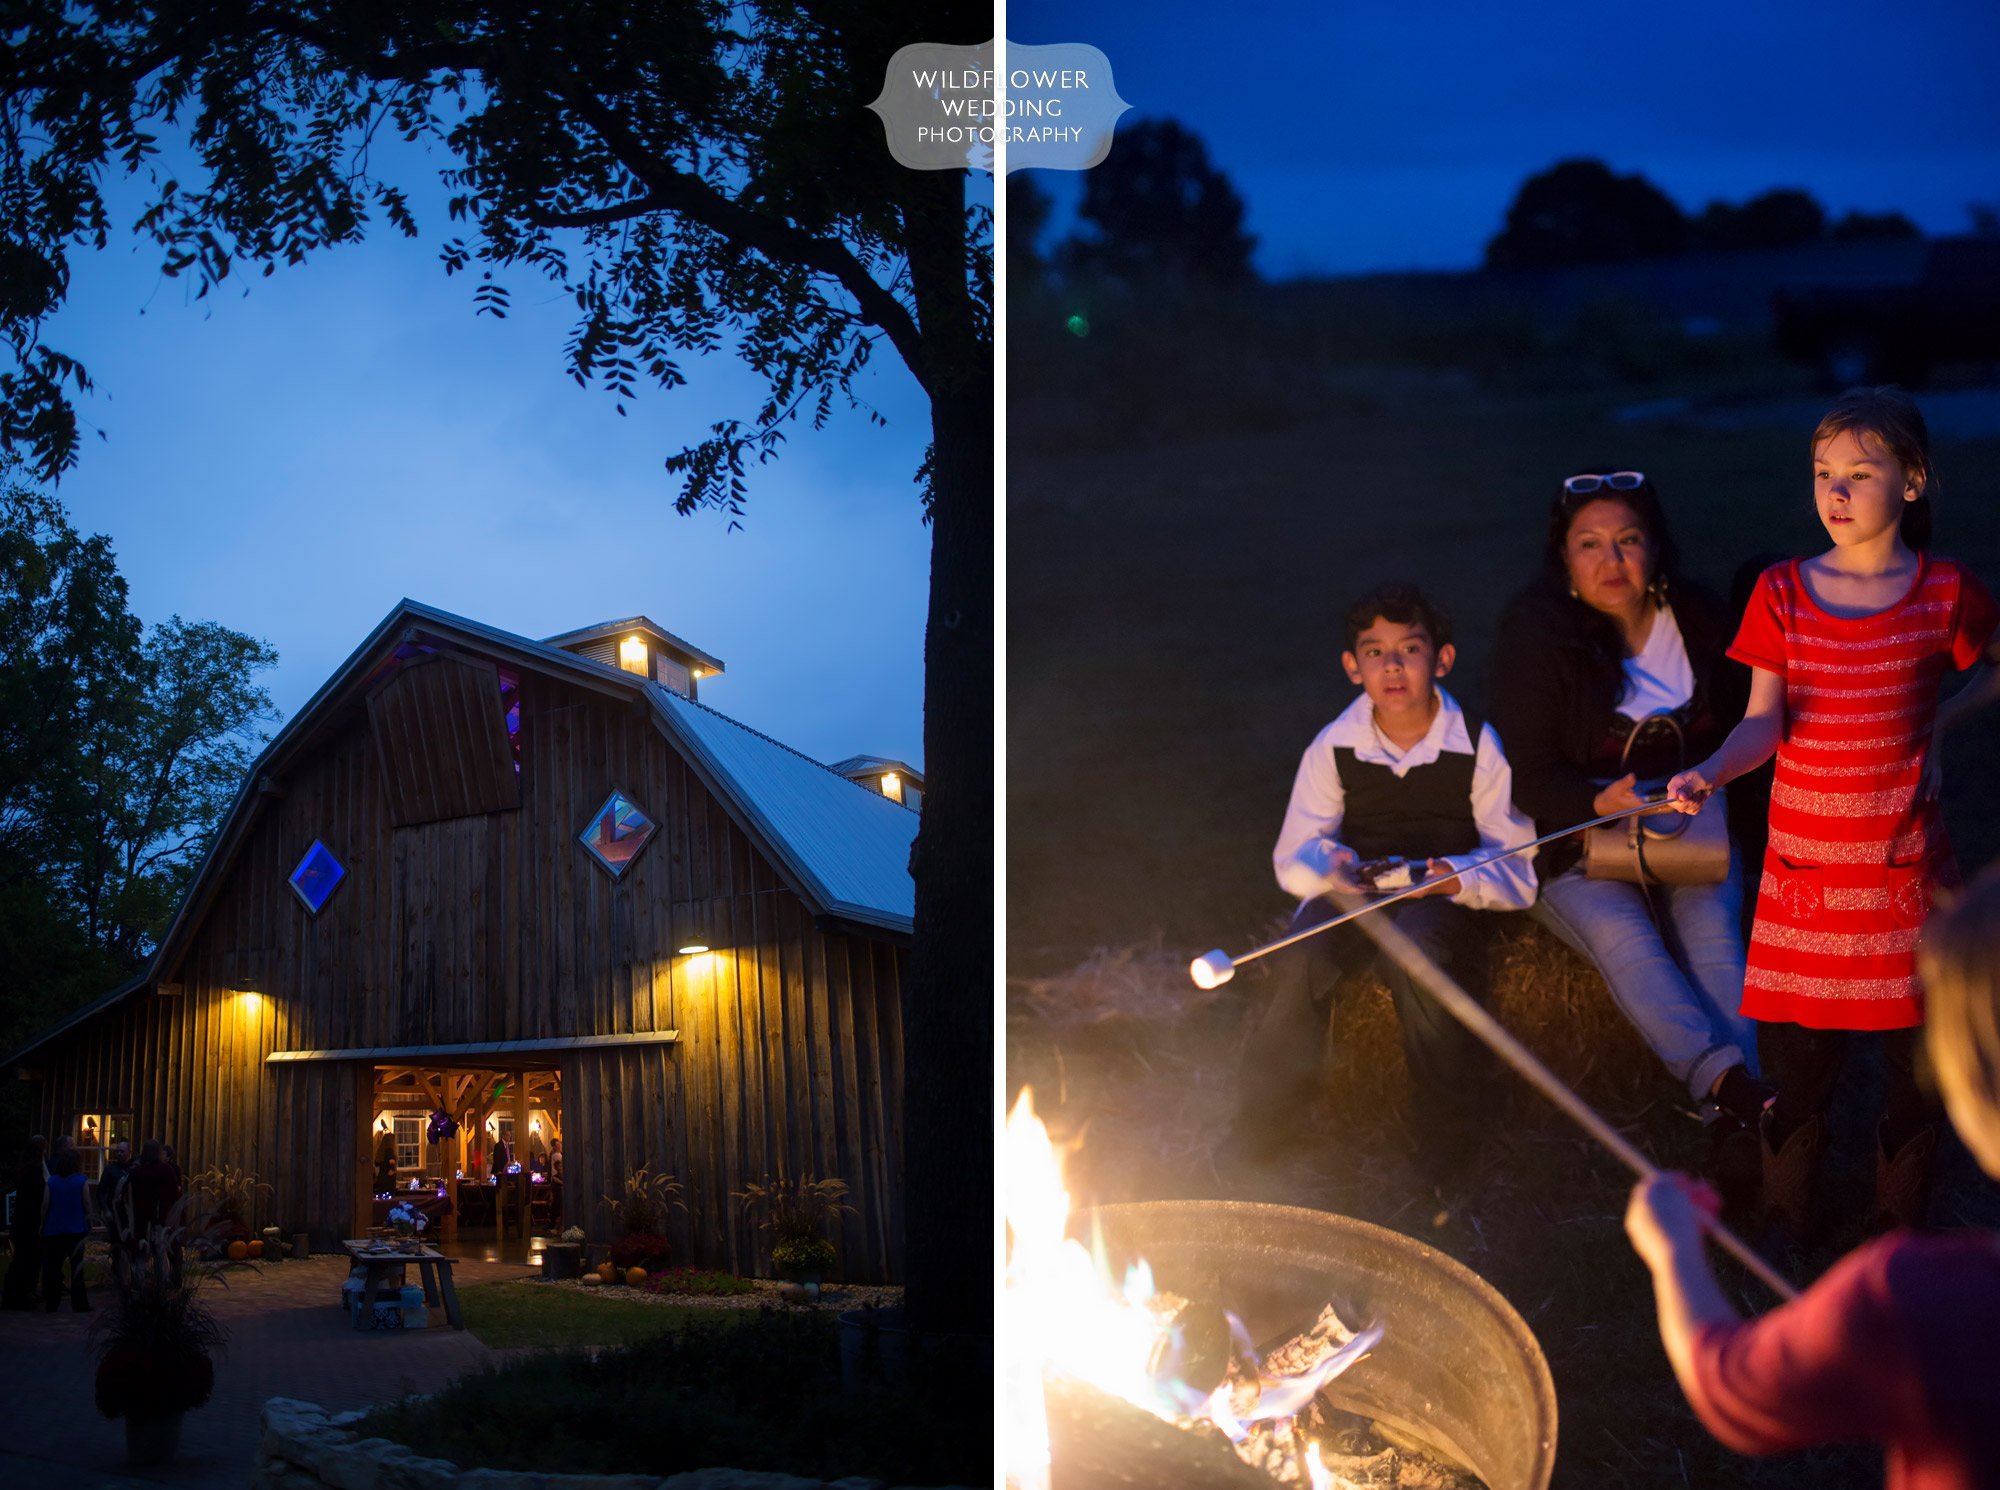 The Schwinn Barn wedding venue hosts a bonfire with smores at weddings.